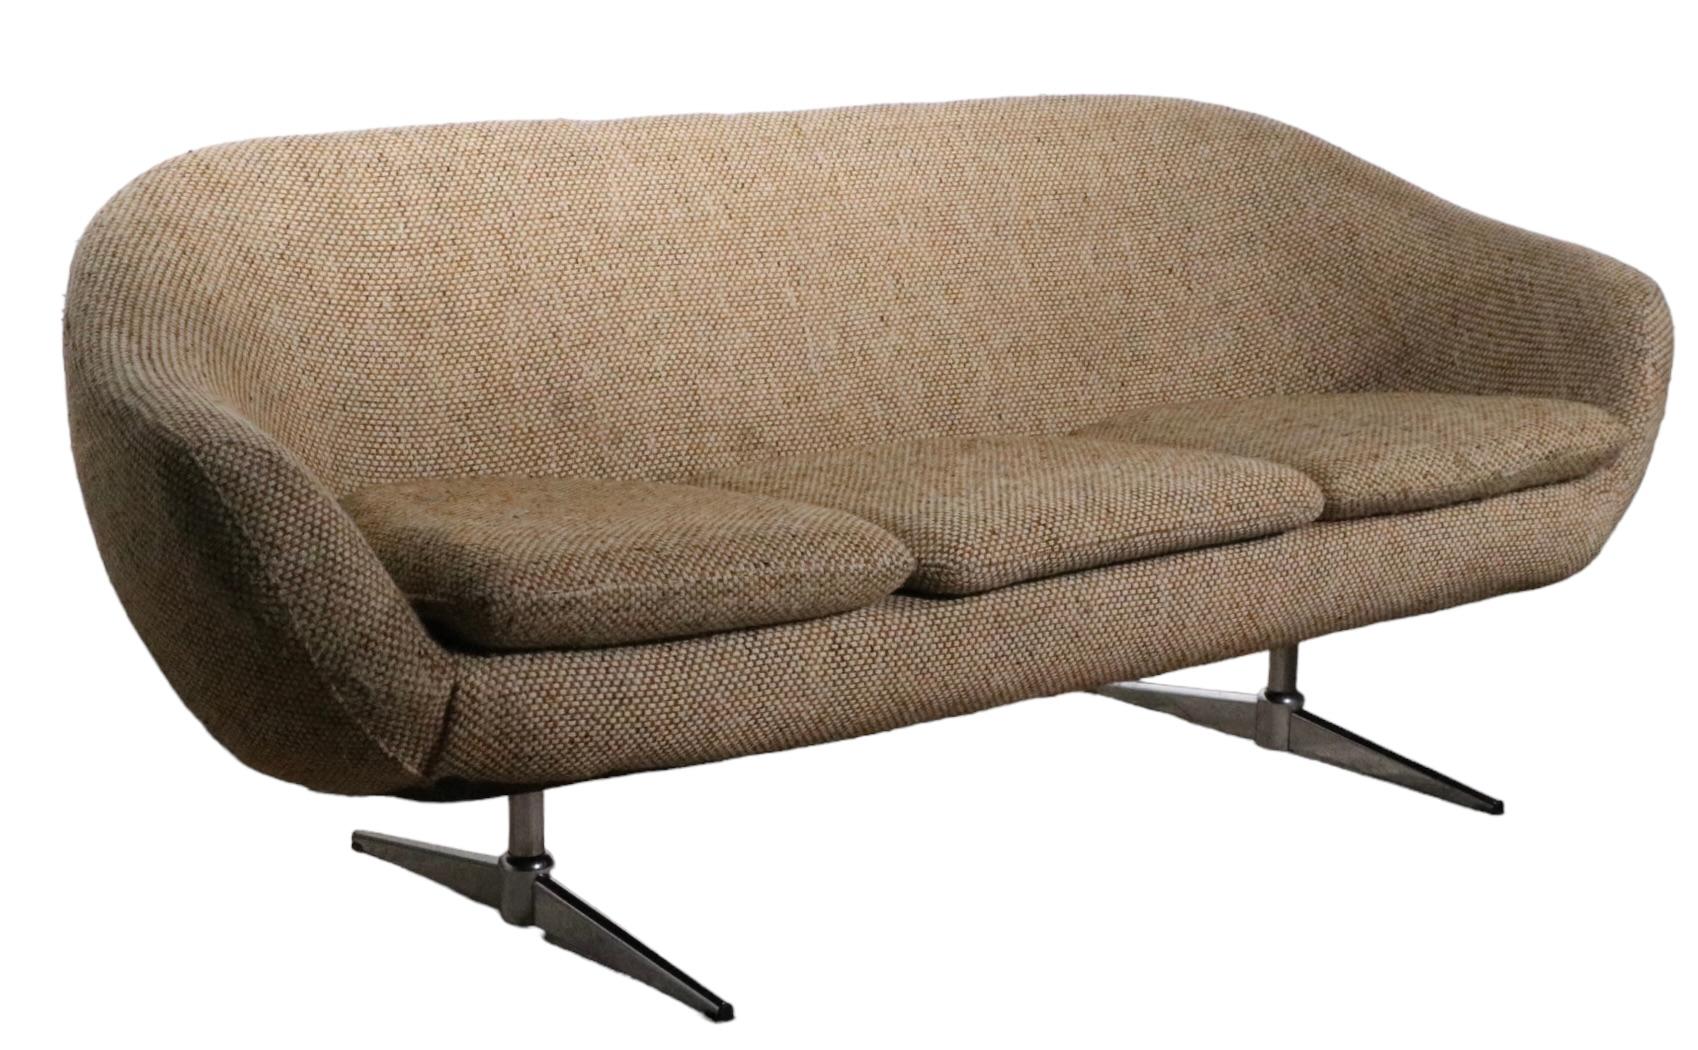 Mod Pod Sofa by Overman in Original Tweed Fabric, circa 1960s - 1970s 6